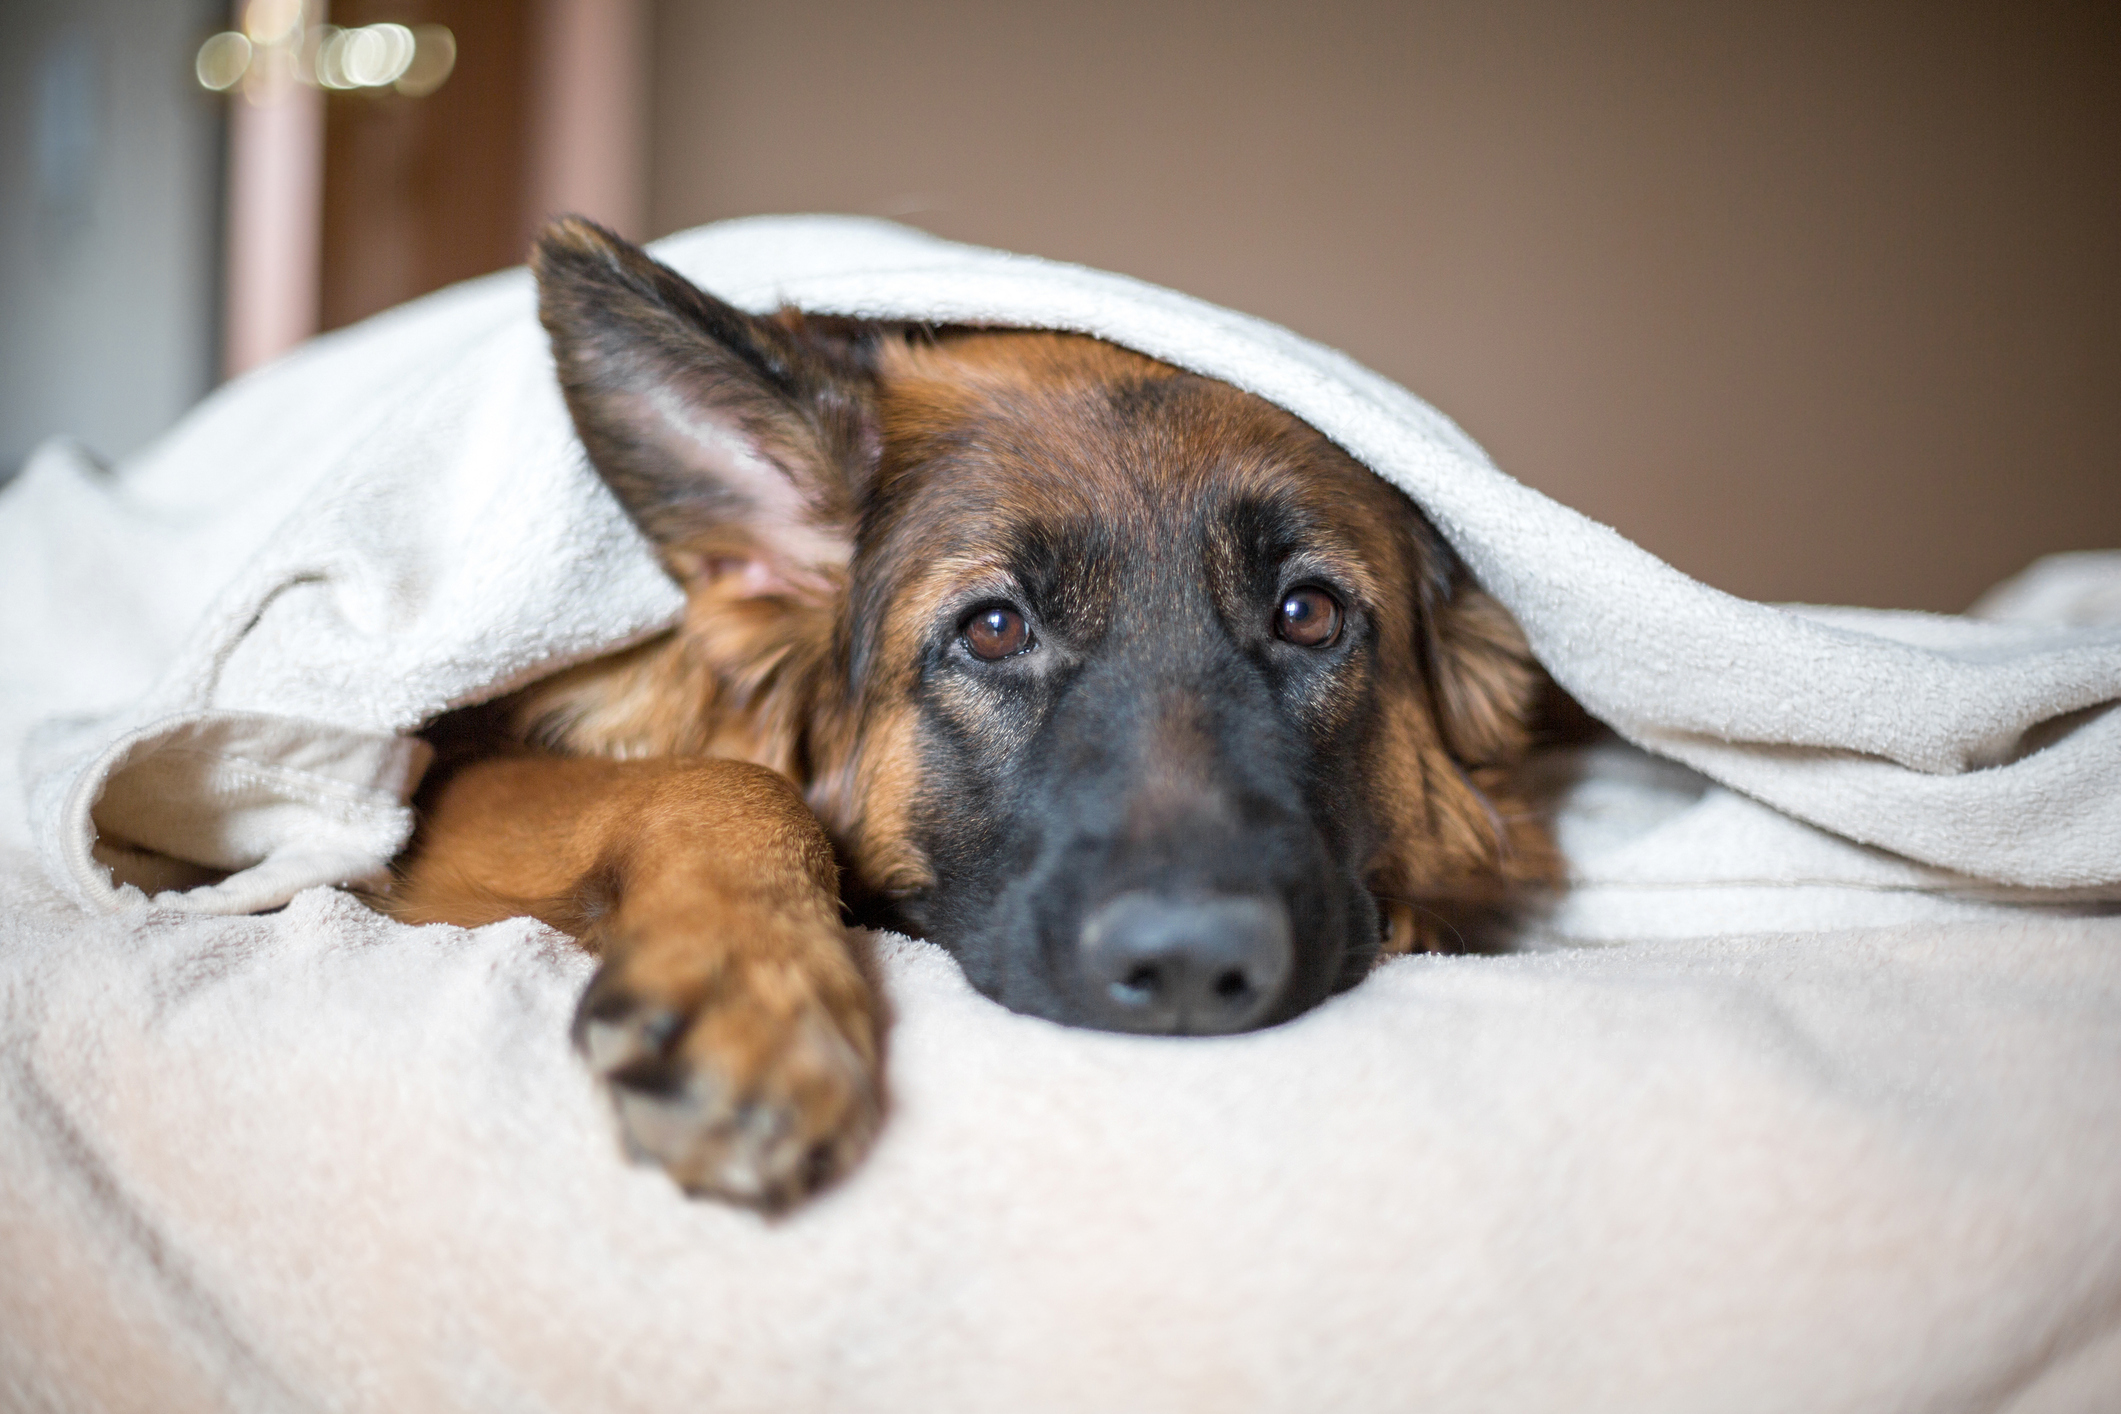 Photo of dog under blanket